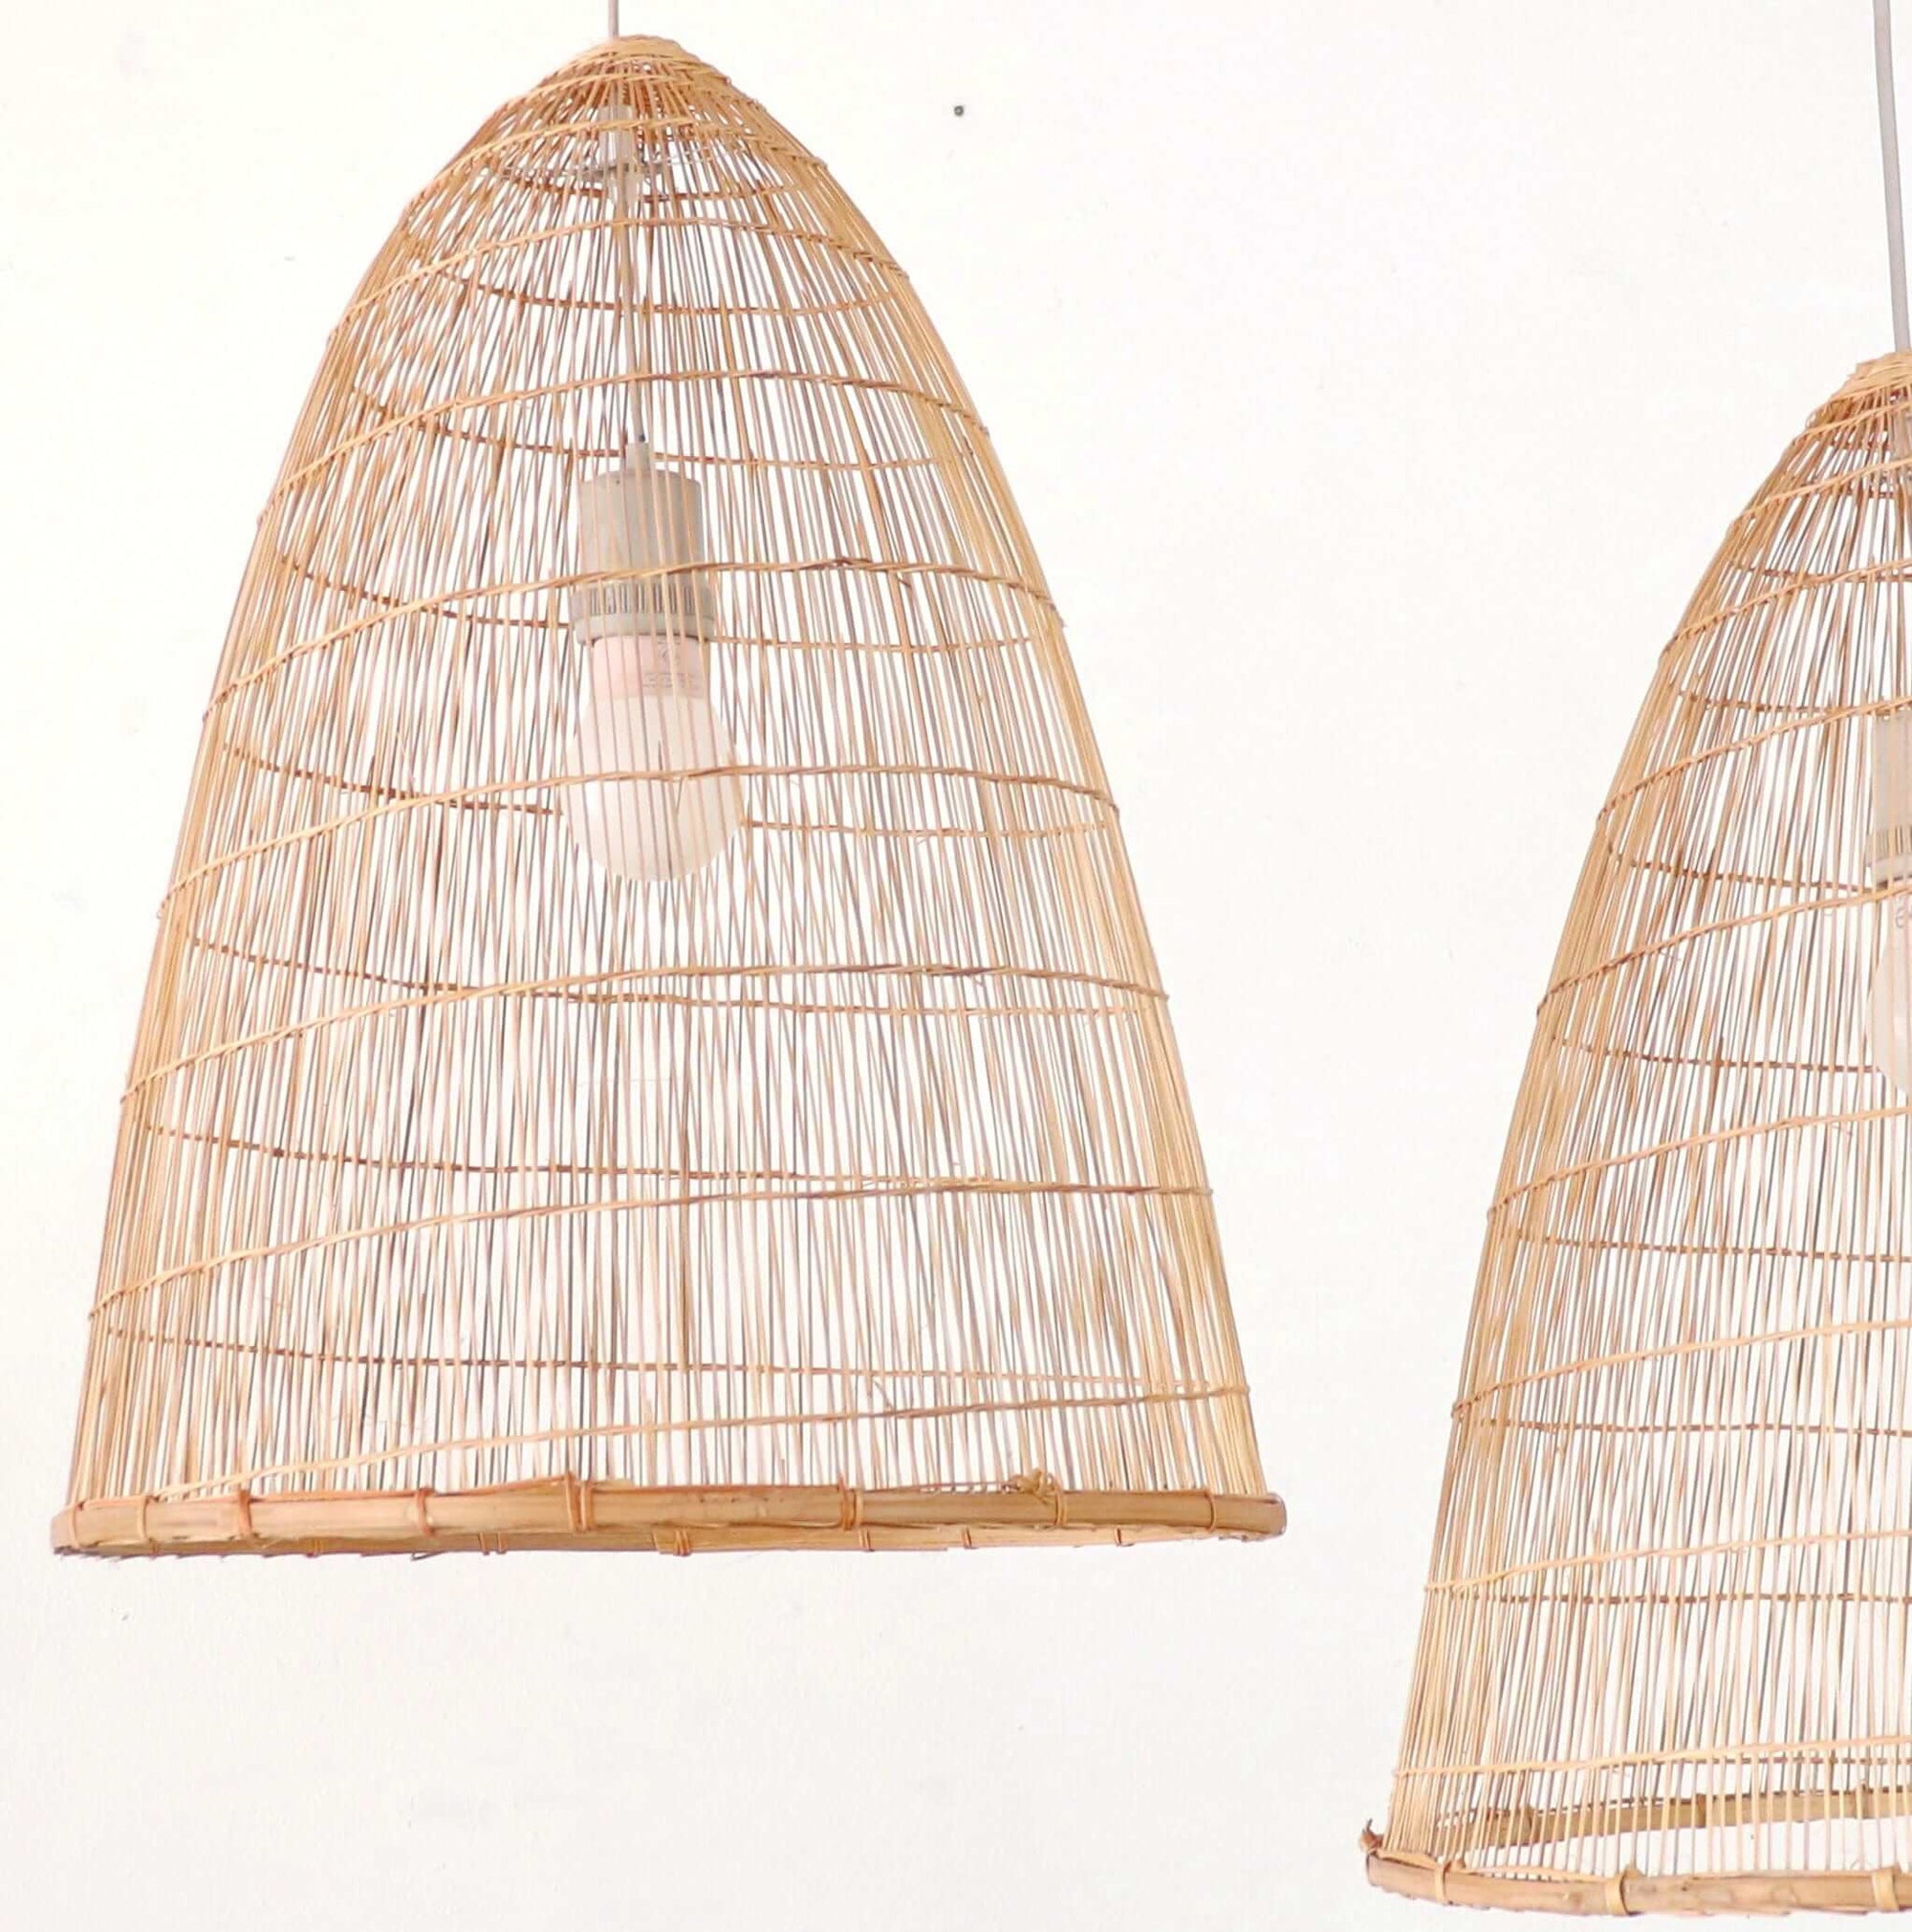 SAWAN - Bamboo Pendant Light Shade